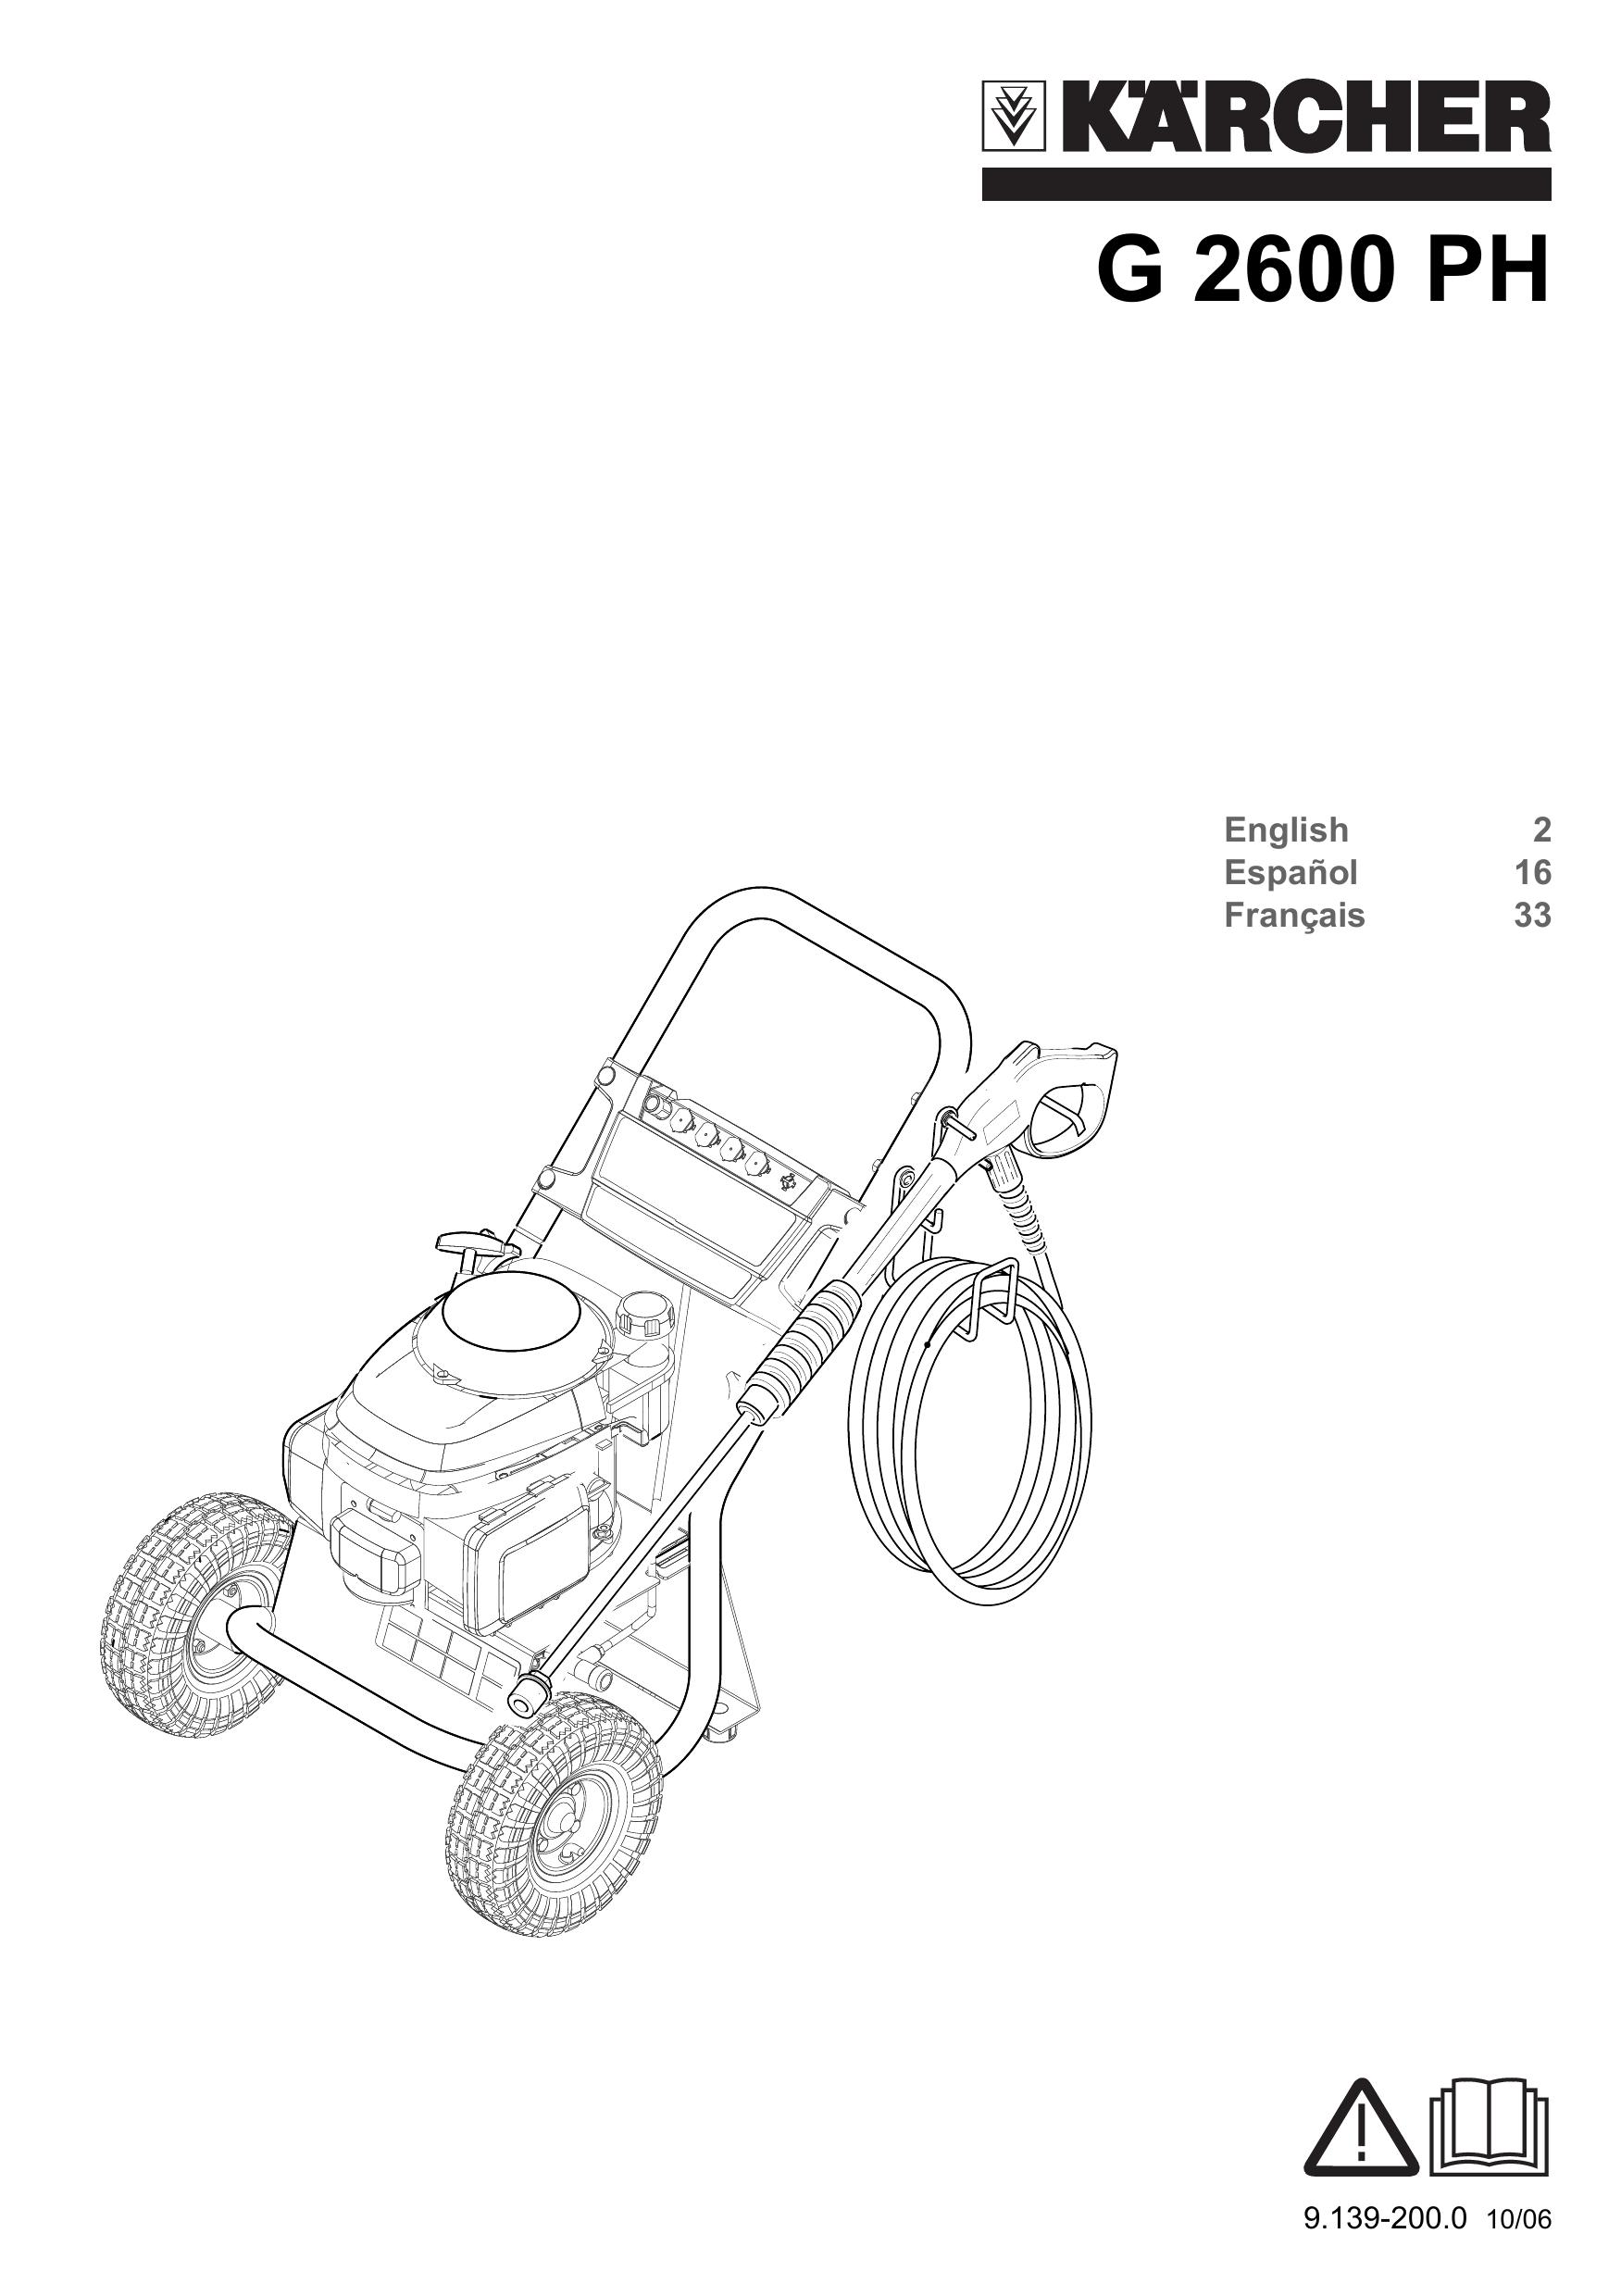 Karcher G 2600 PH Pressure Washer User Manual